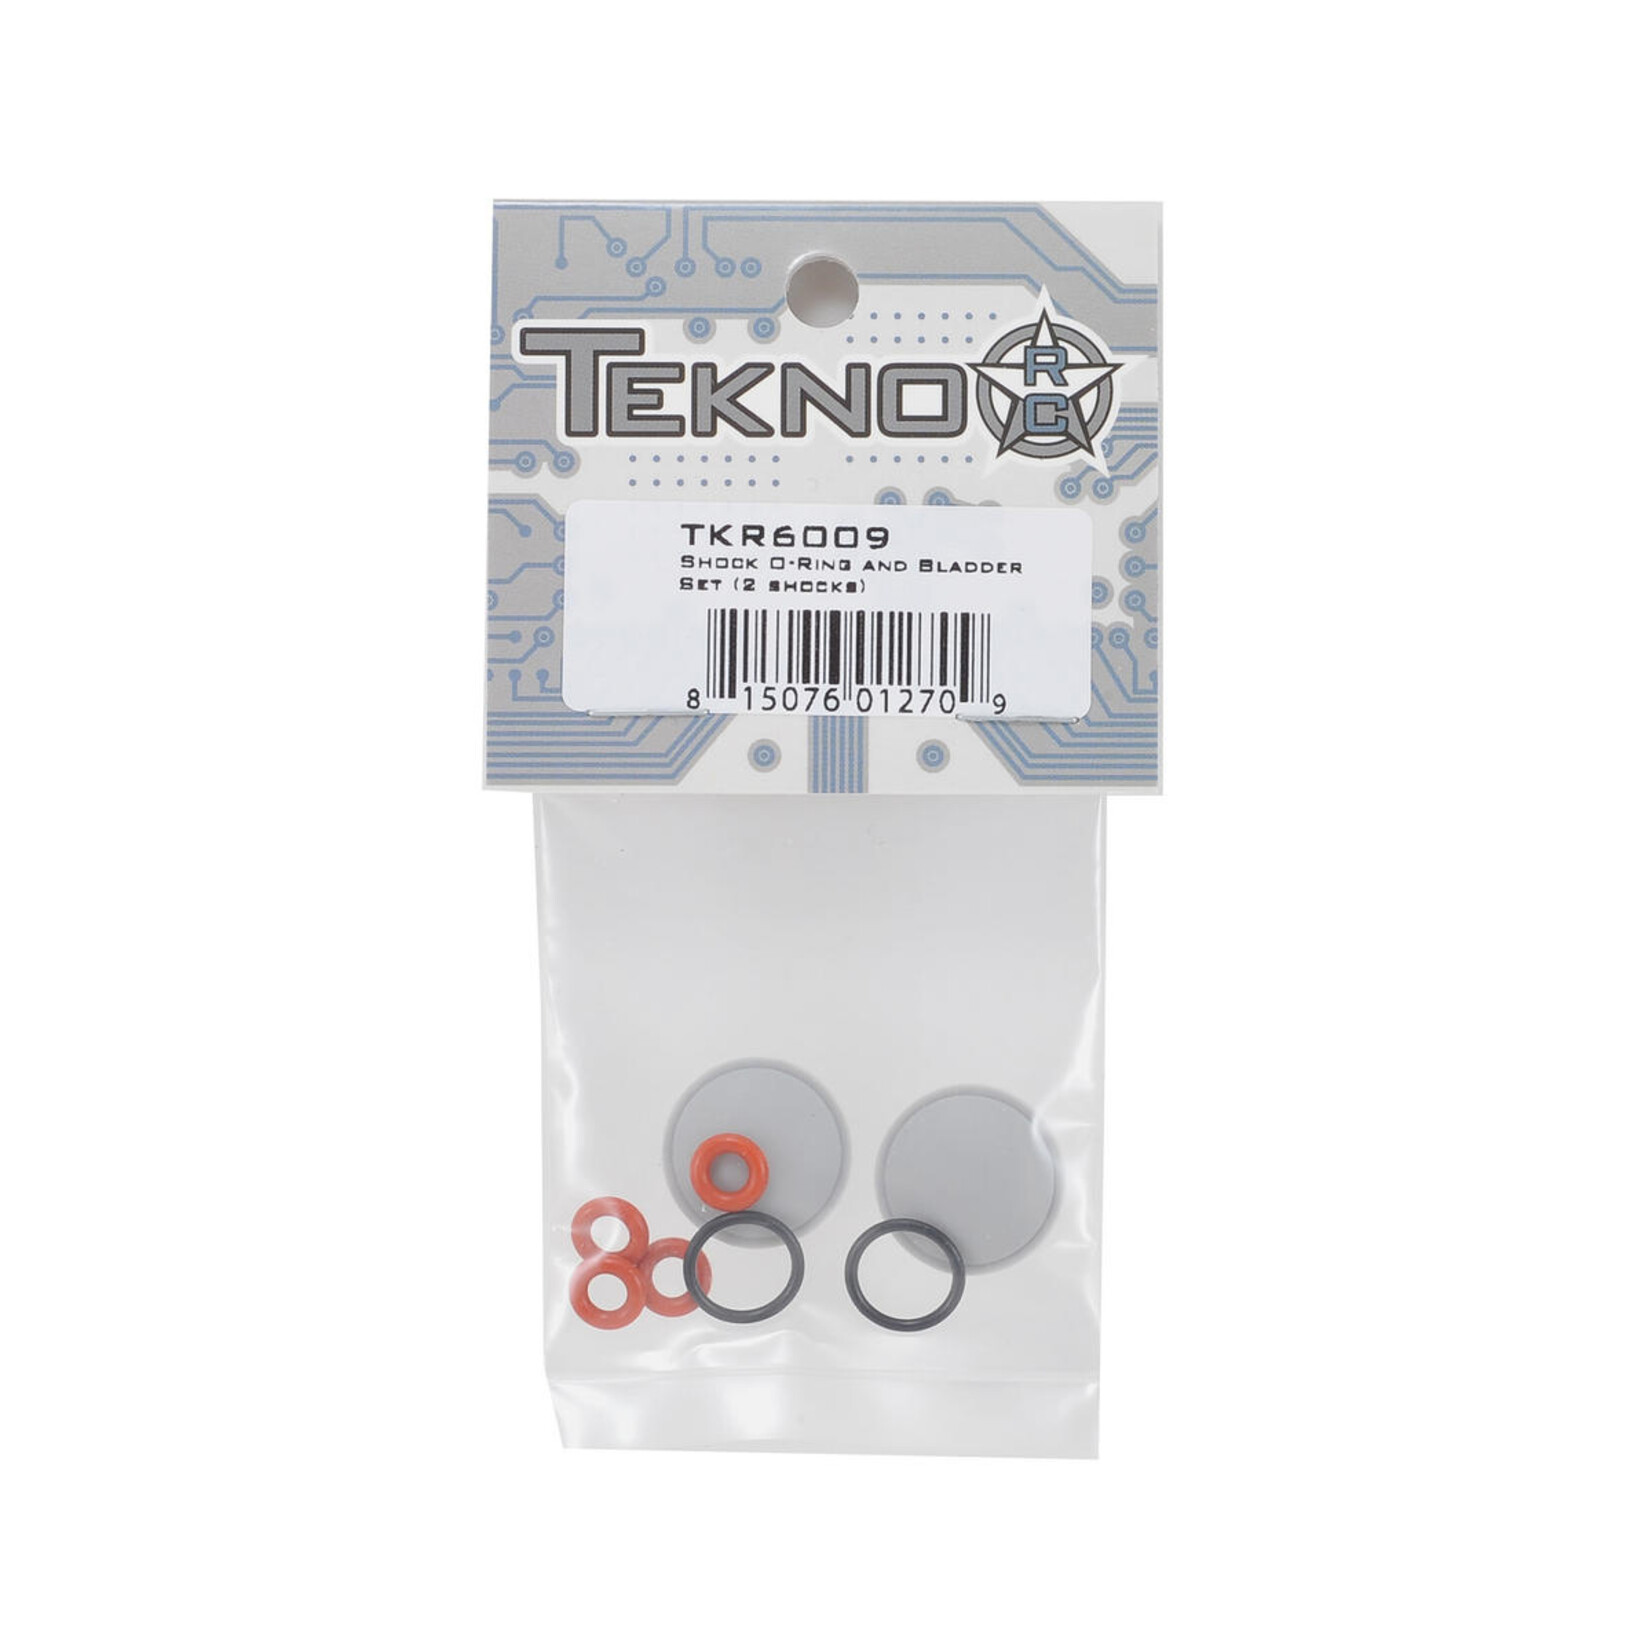 Tekno RC Tekno RC Shock O-Ring & Bladder Set #TKR6009